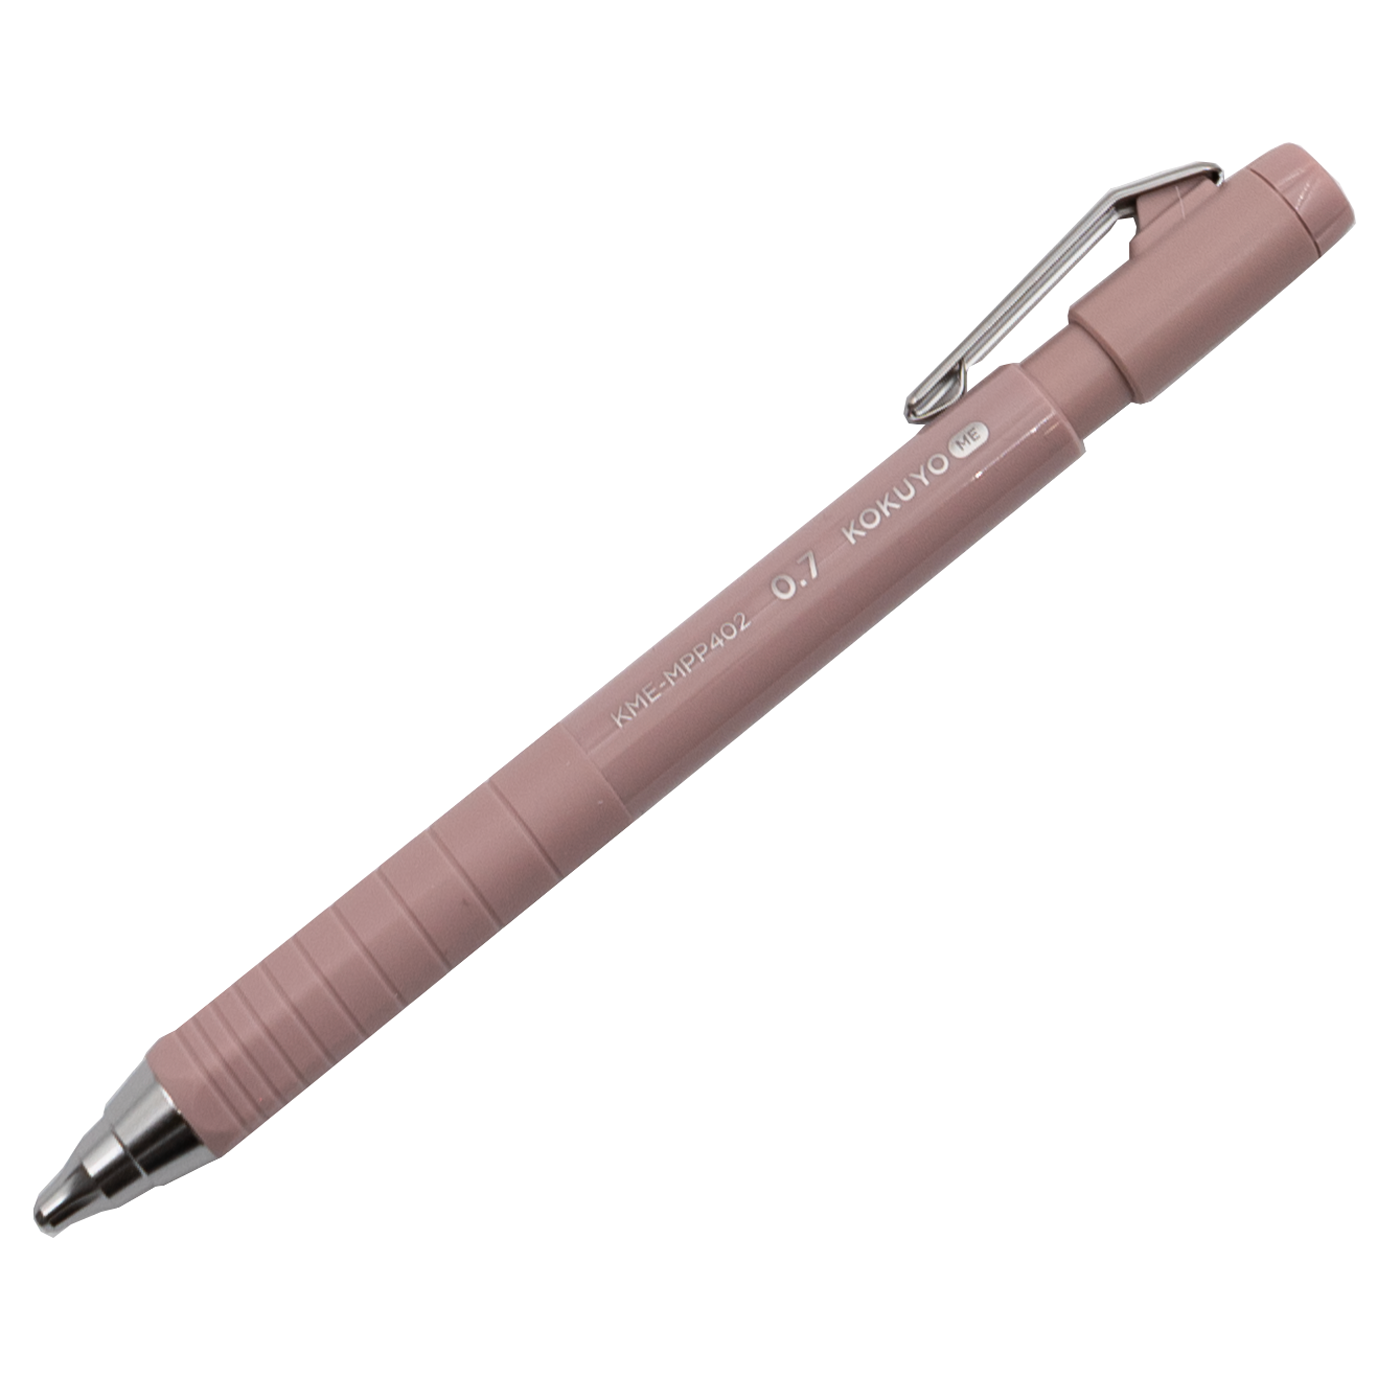 Kokuyo Me Mechanical Pencil 0.7mm - Taupe Rose